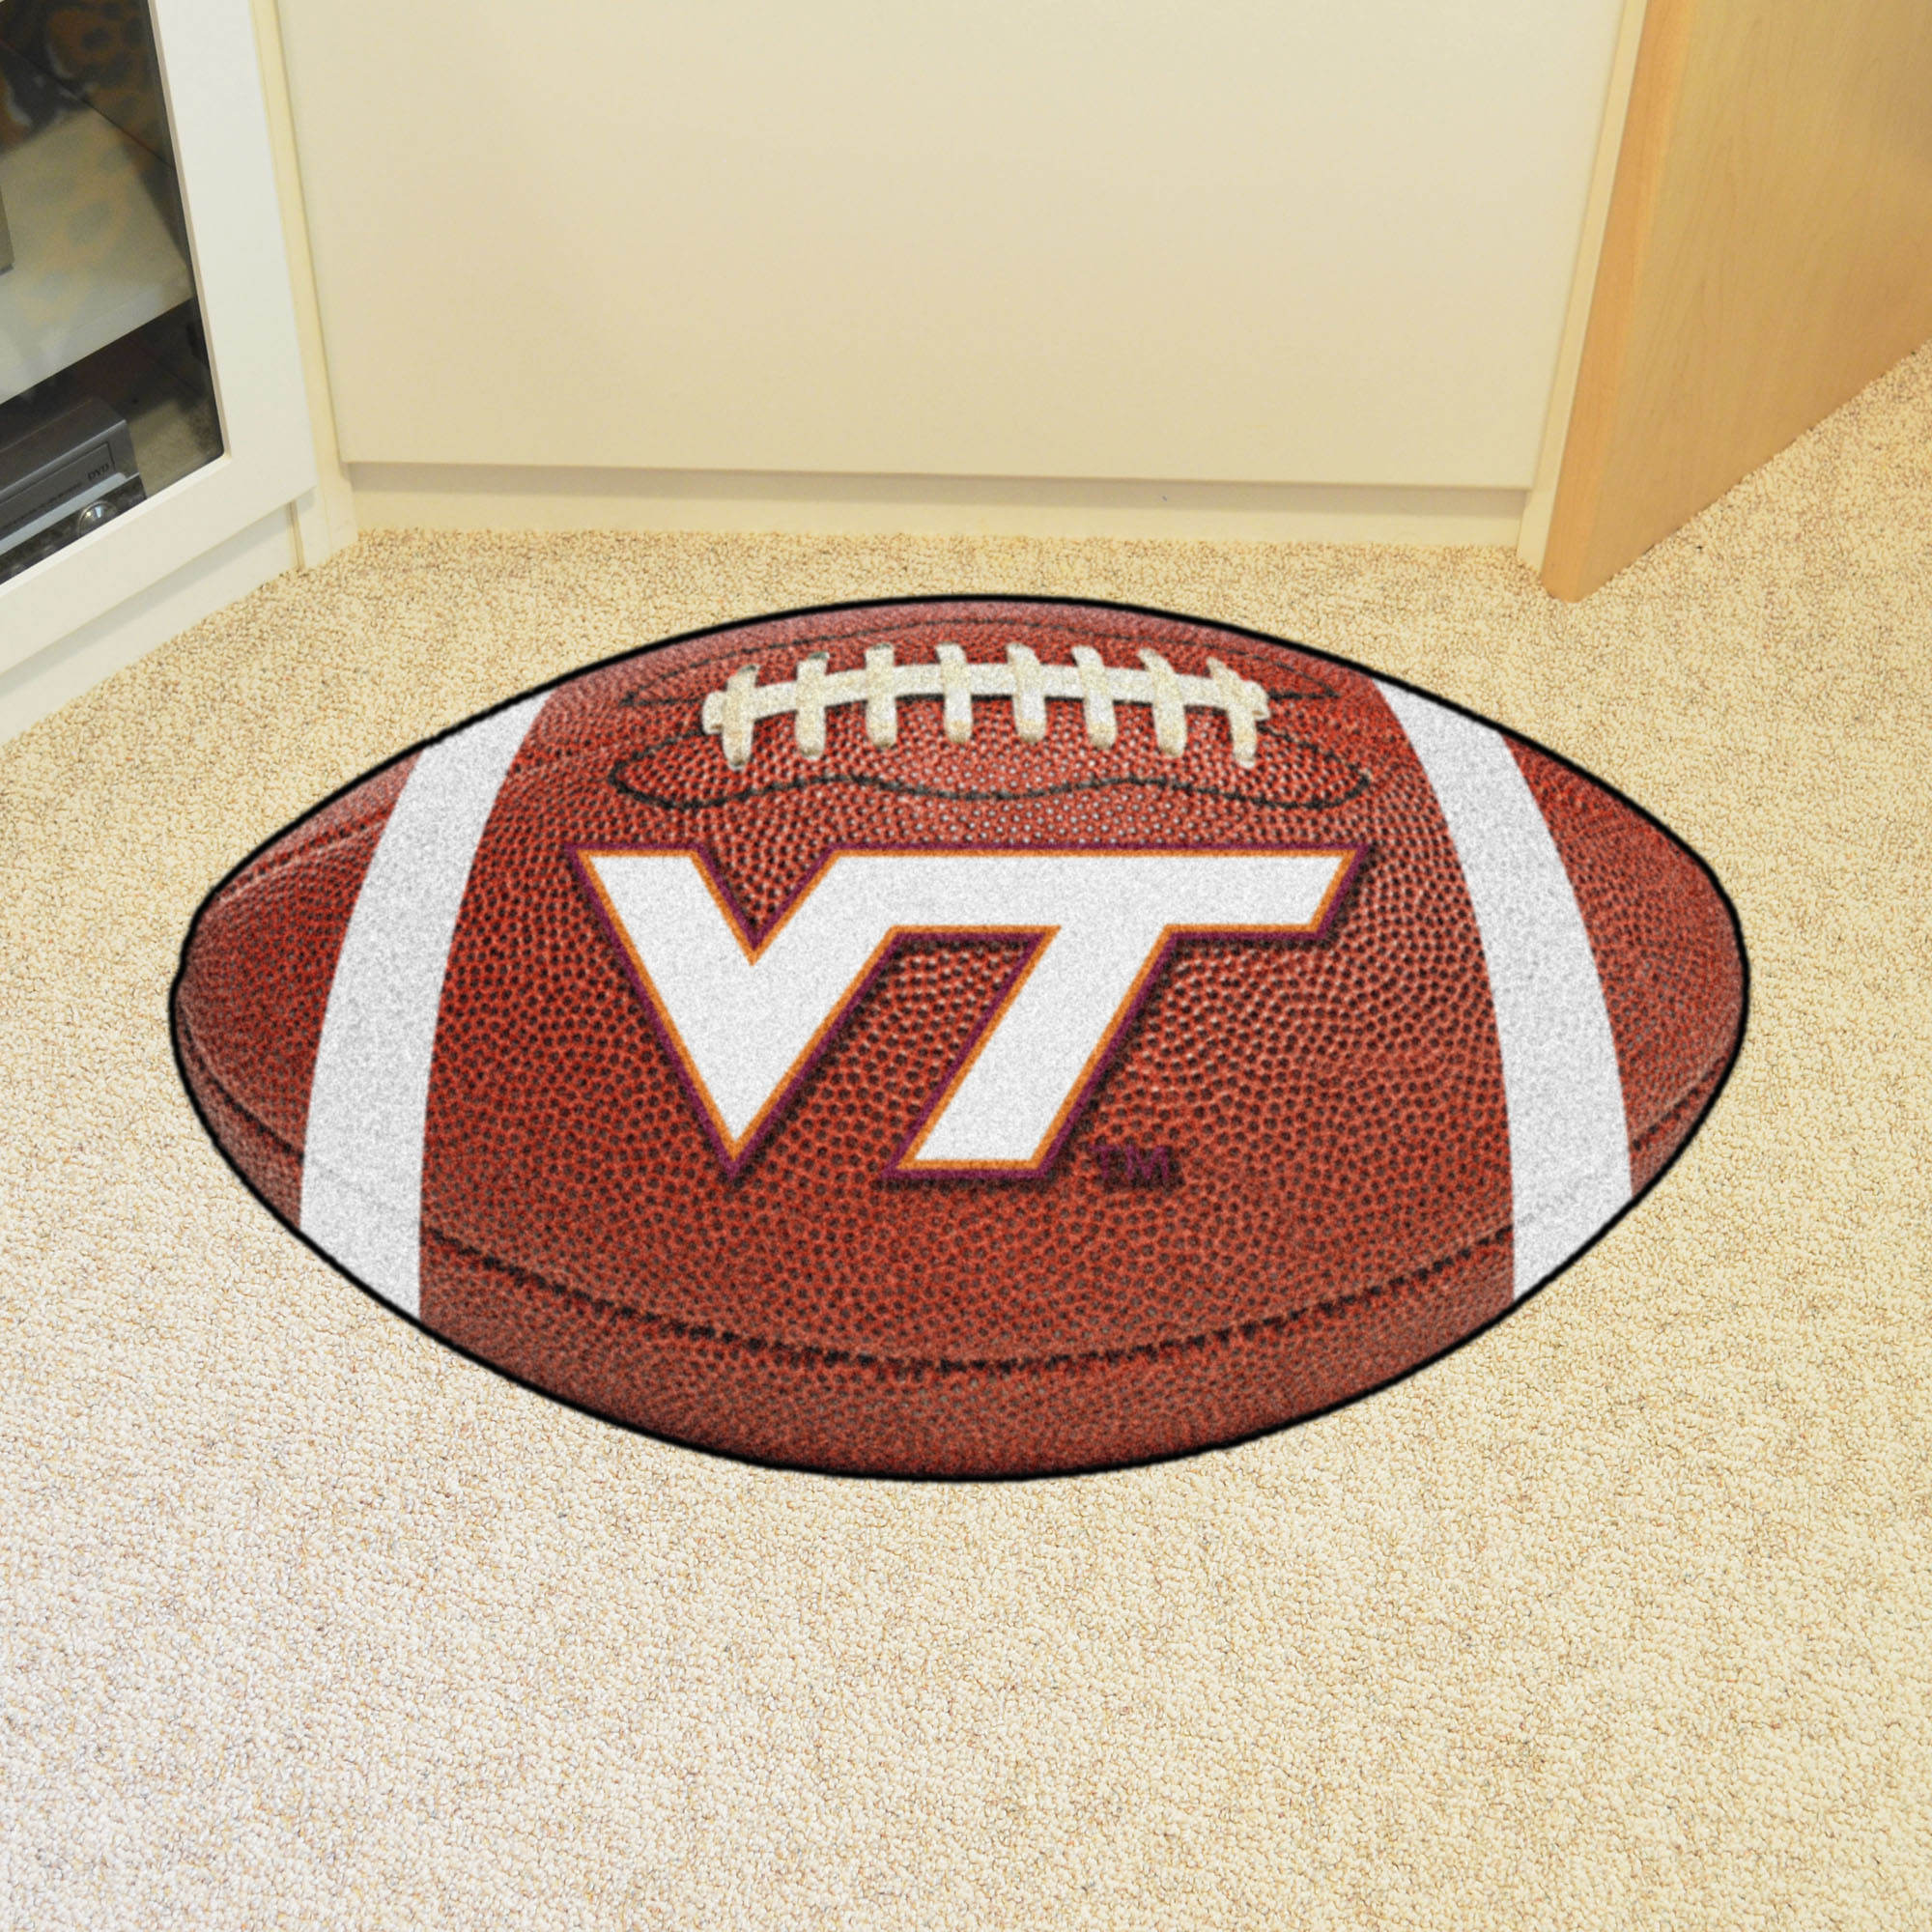 Virginia Tech Ball Shaped Area Rugs (Ball Shaped Area Rugs: Football)